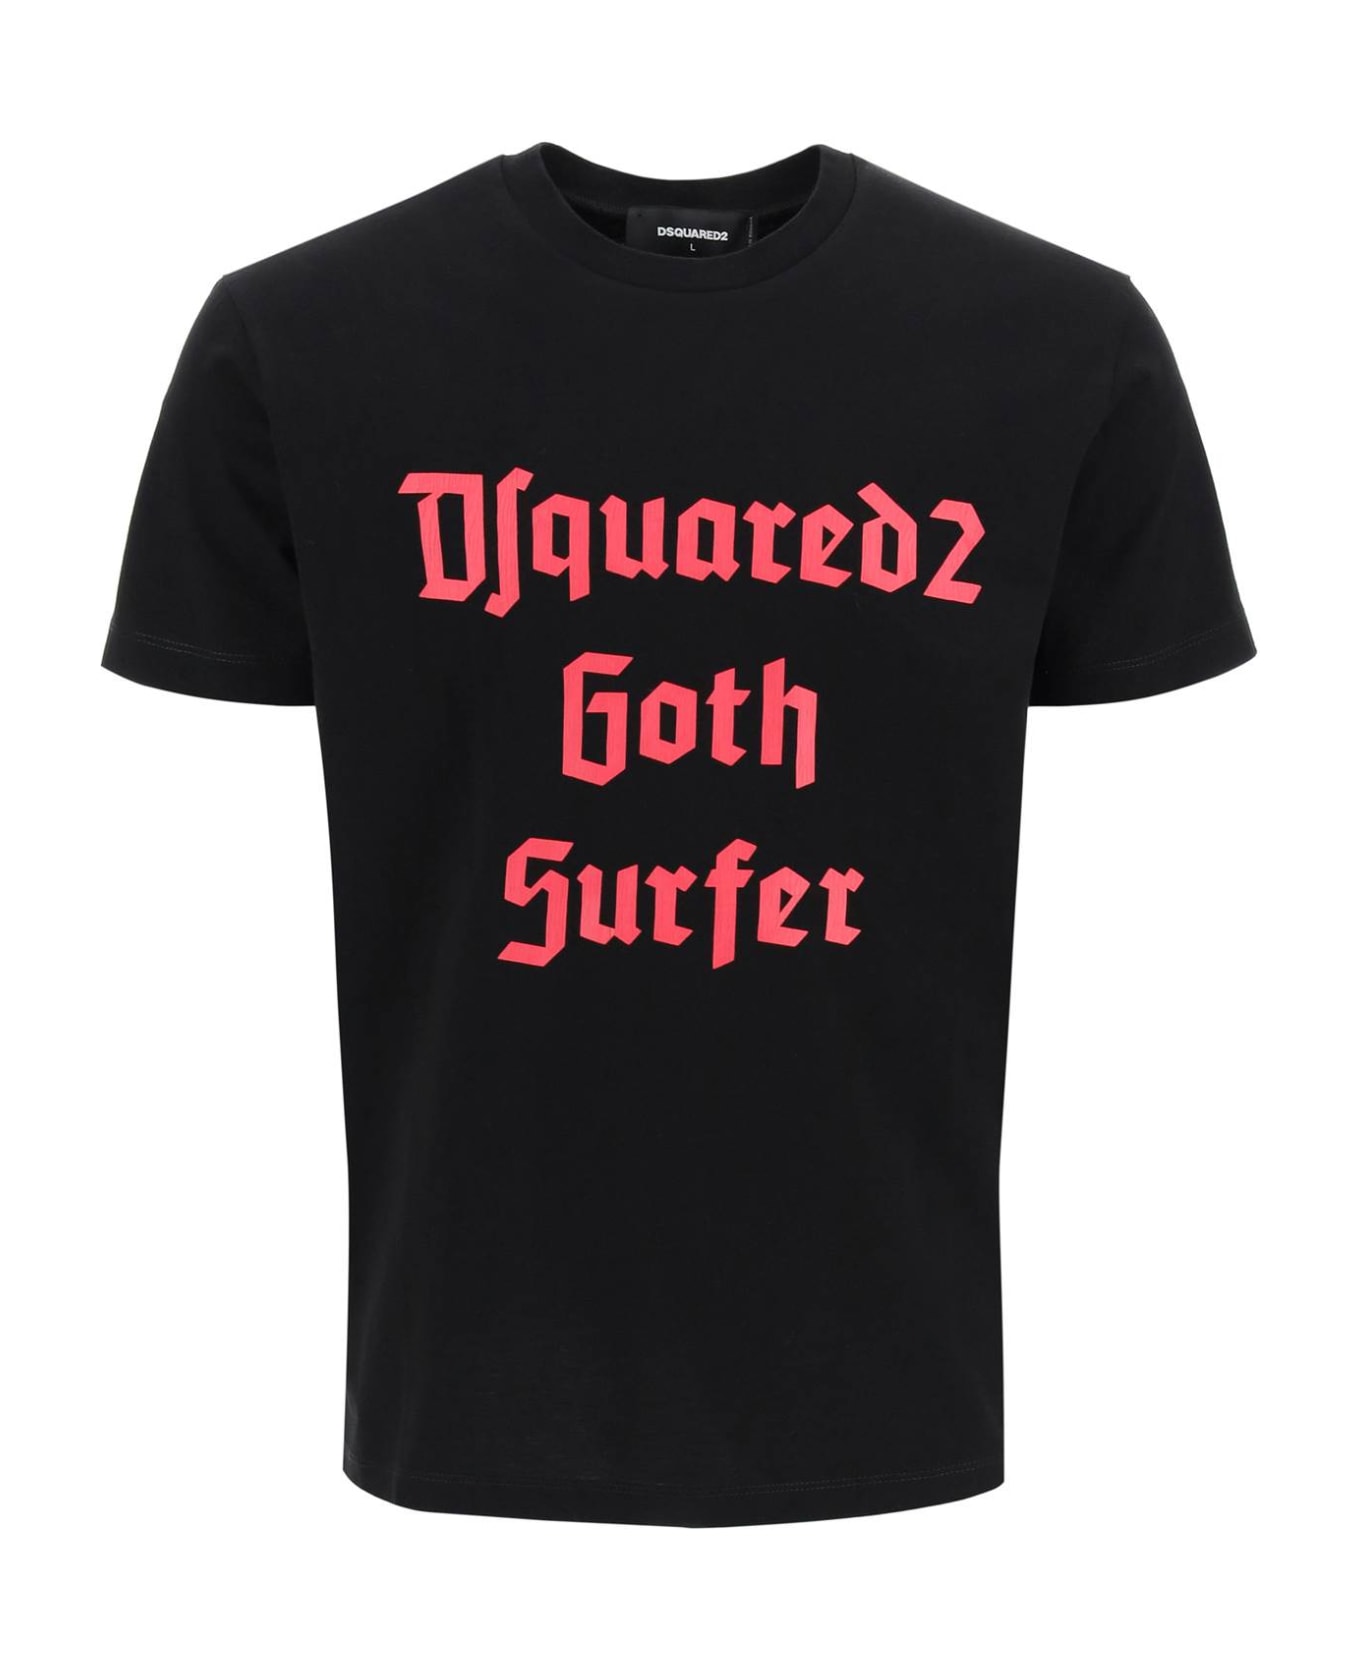 Dsquared2 Goth Surfer T-shirt - Black